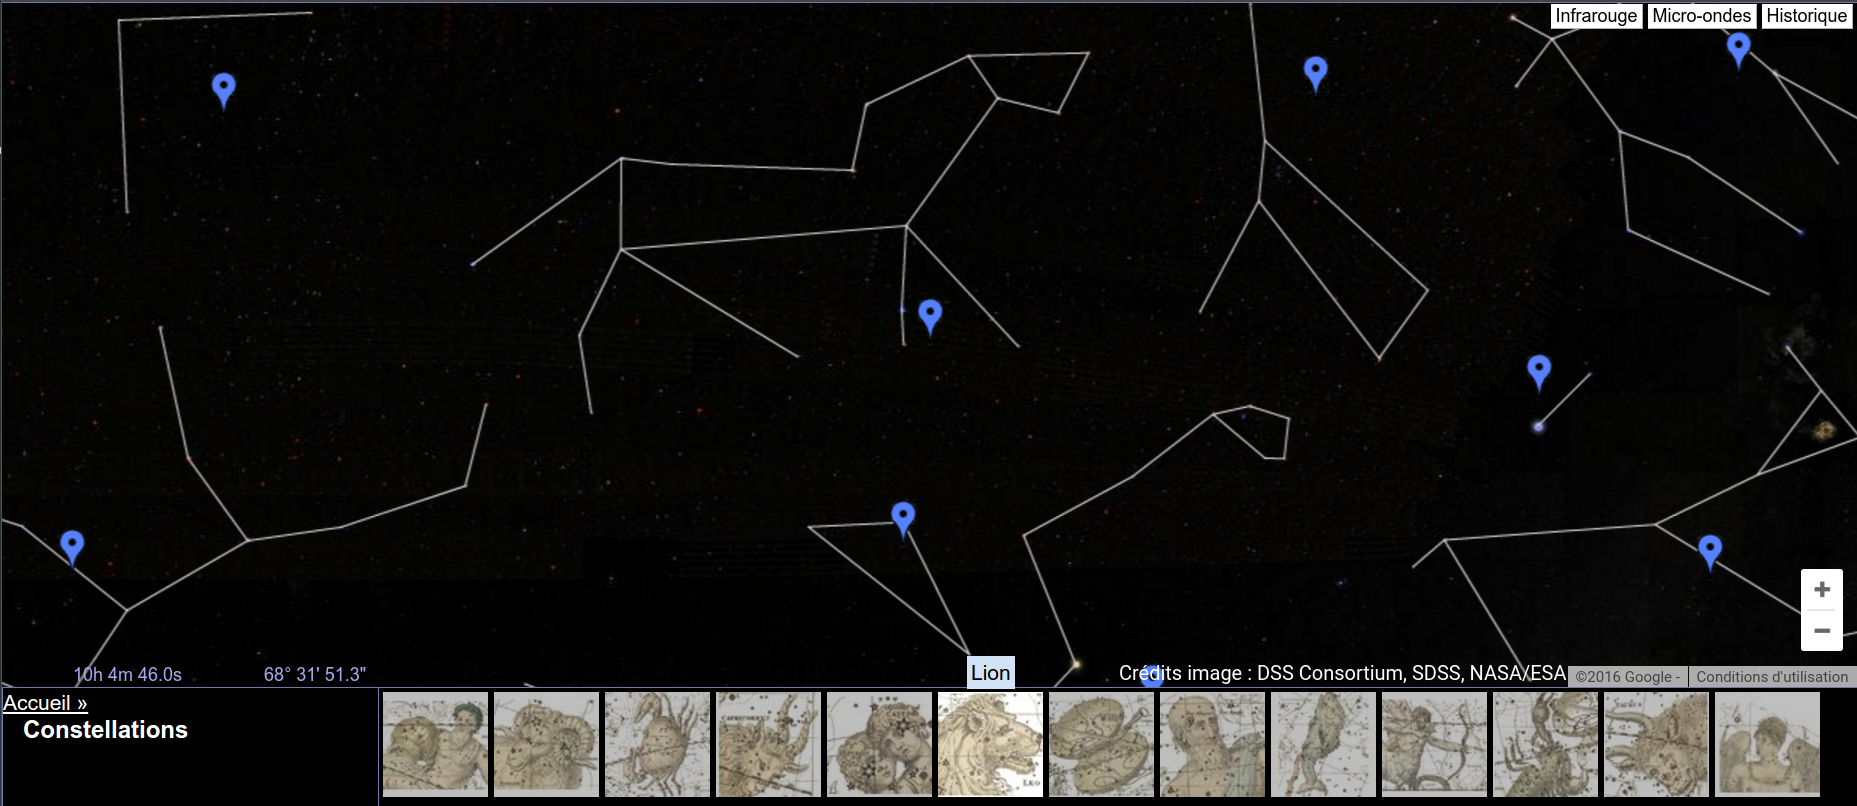 Accueil >> Constellations (capture d’écran GoogleSky). Le ciel est un disney. ©Google